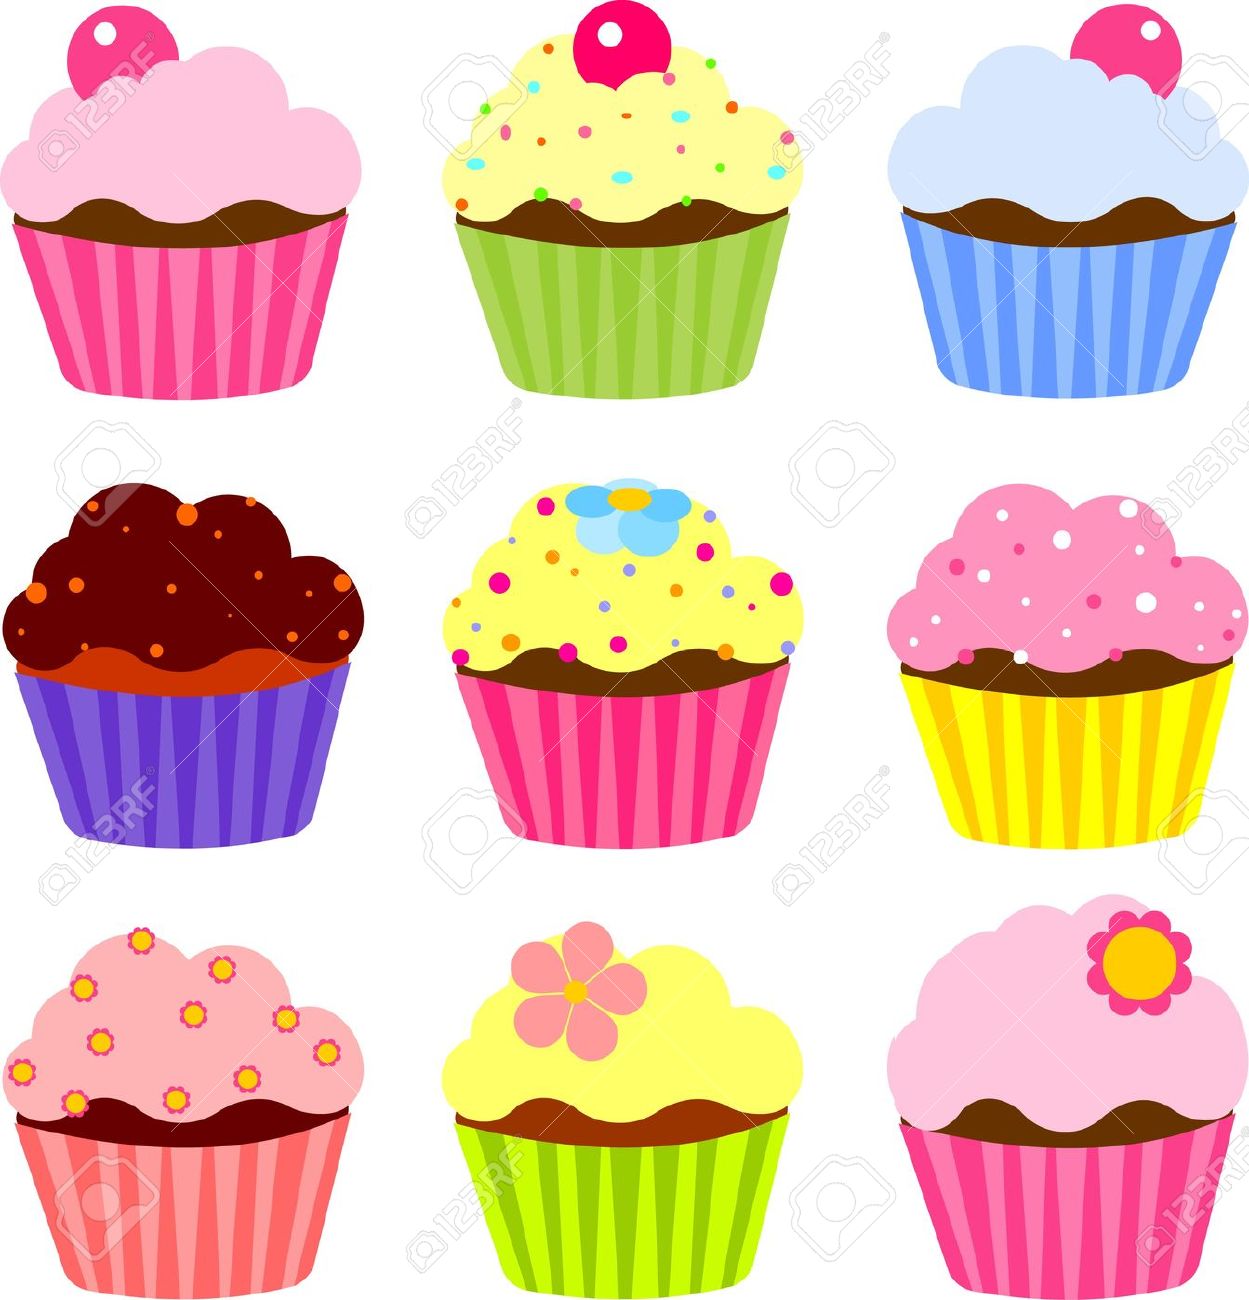 birthday-cupcake-cartoon-clipart-best